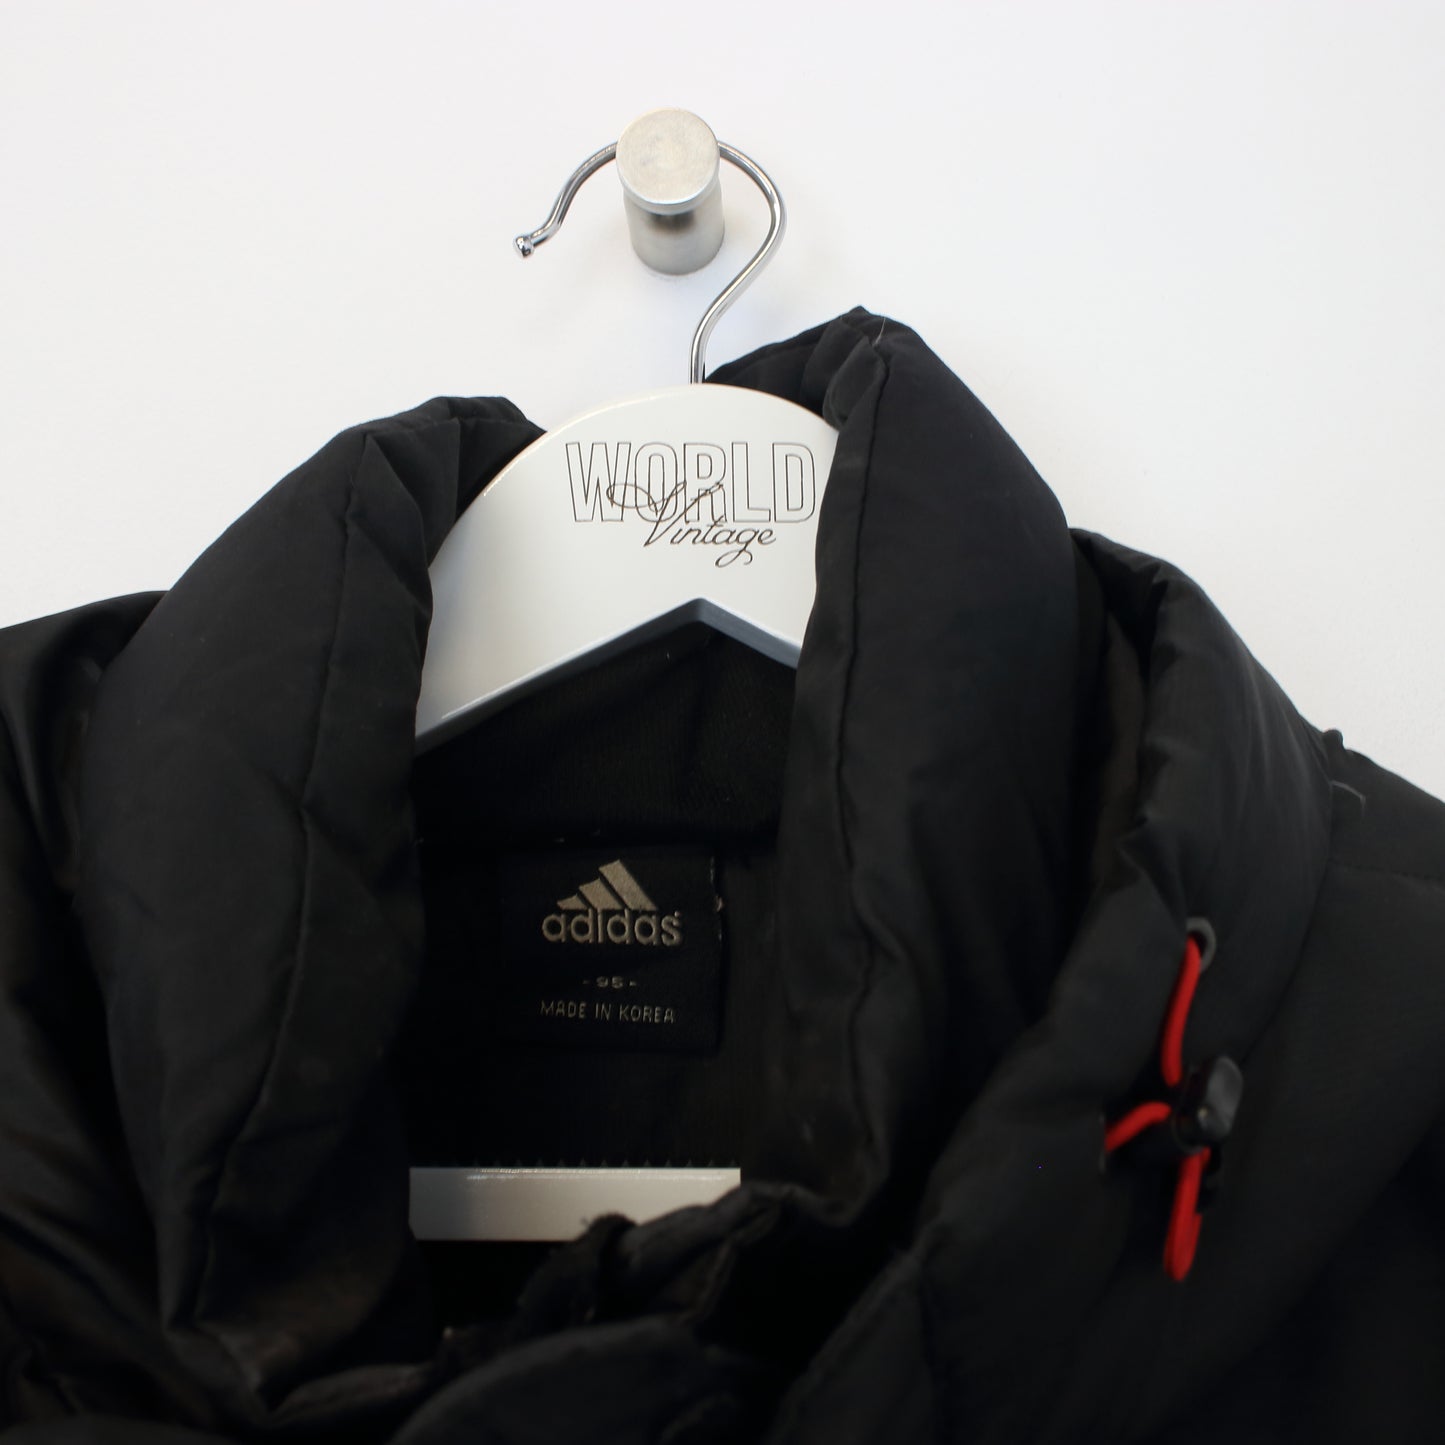 Vintage Adidas jacket in black. Best fits L